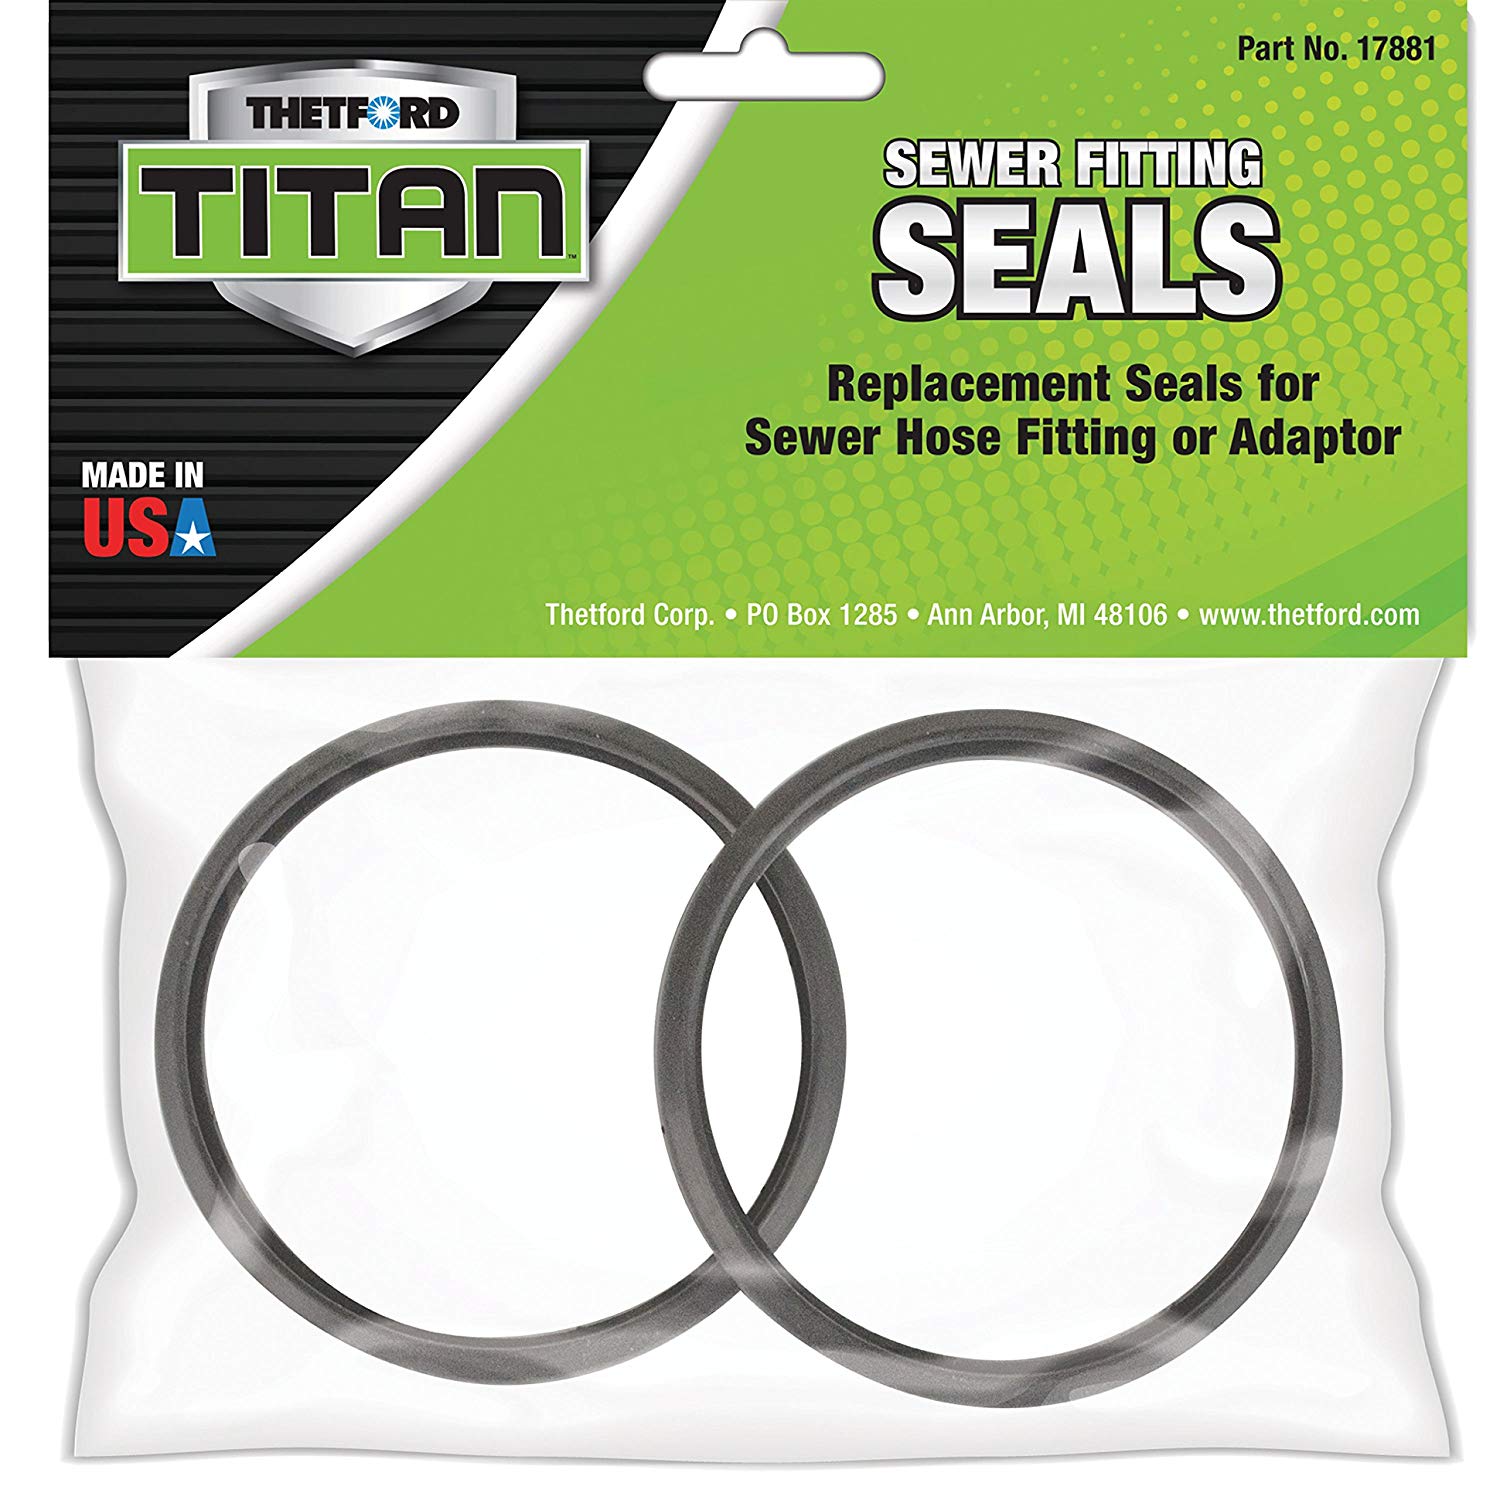 Thetford 17881 Titan Sewer Fitting Seals